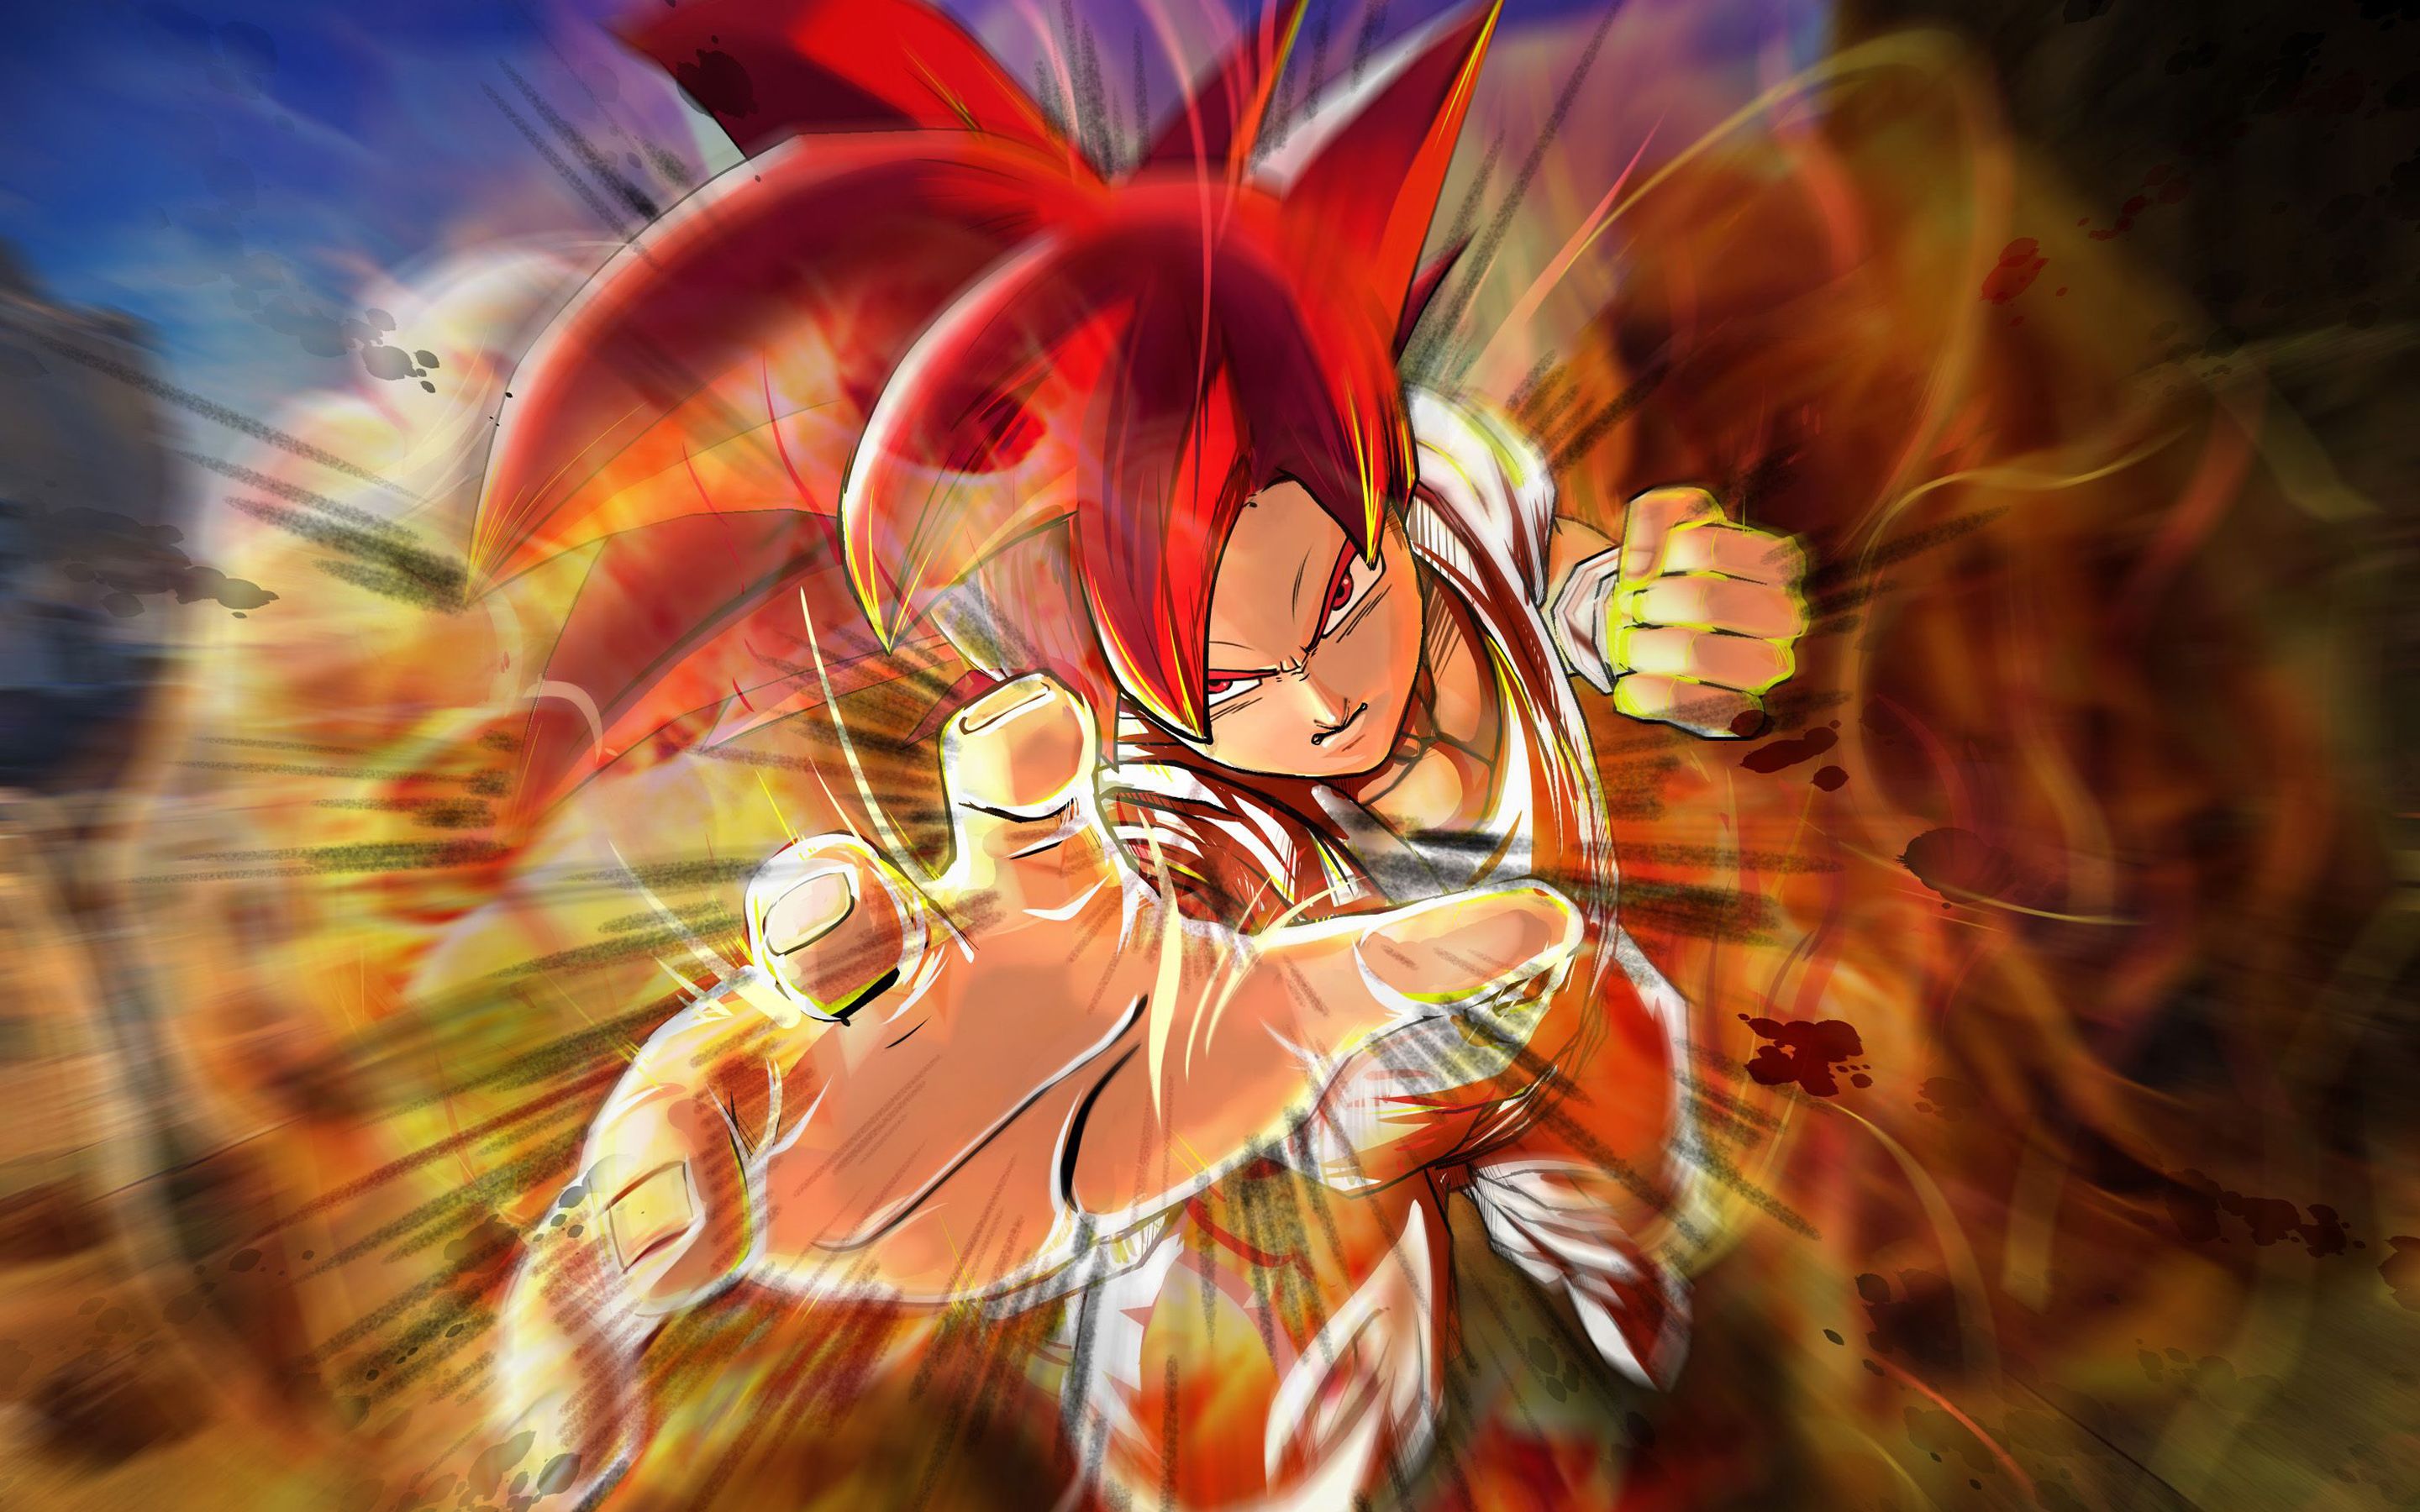 Download wallpaper Son Goku, 4k, Dragon Ball Z, Red Super Saiyan God, Goku Red Hair, manga, DBZ, Red Son Goku, Dragon Ball for desktop with resolution 2880x1800. High Quality HD picture wallpaper